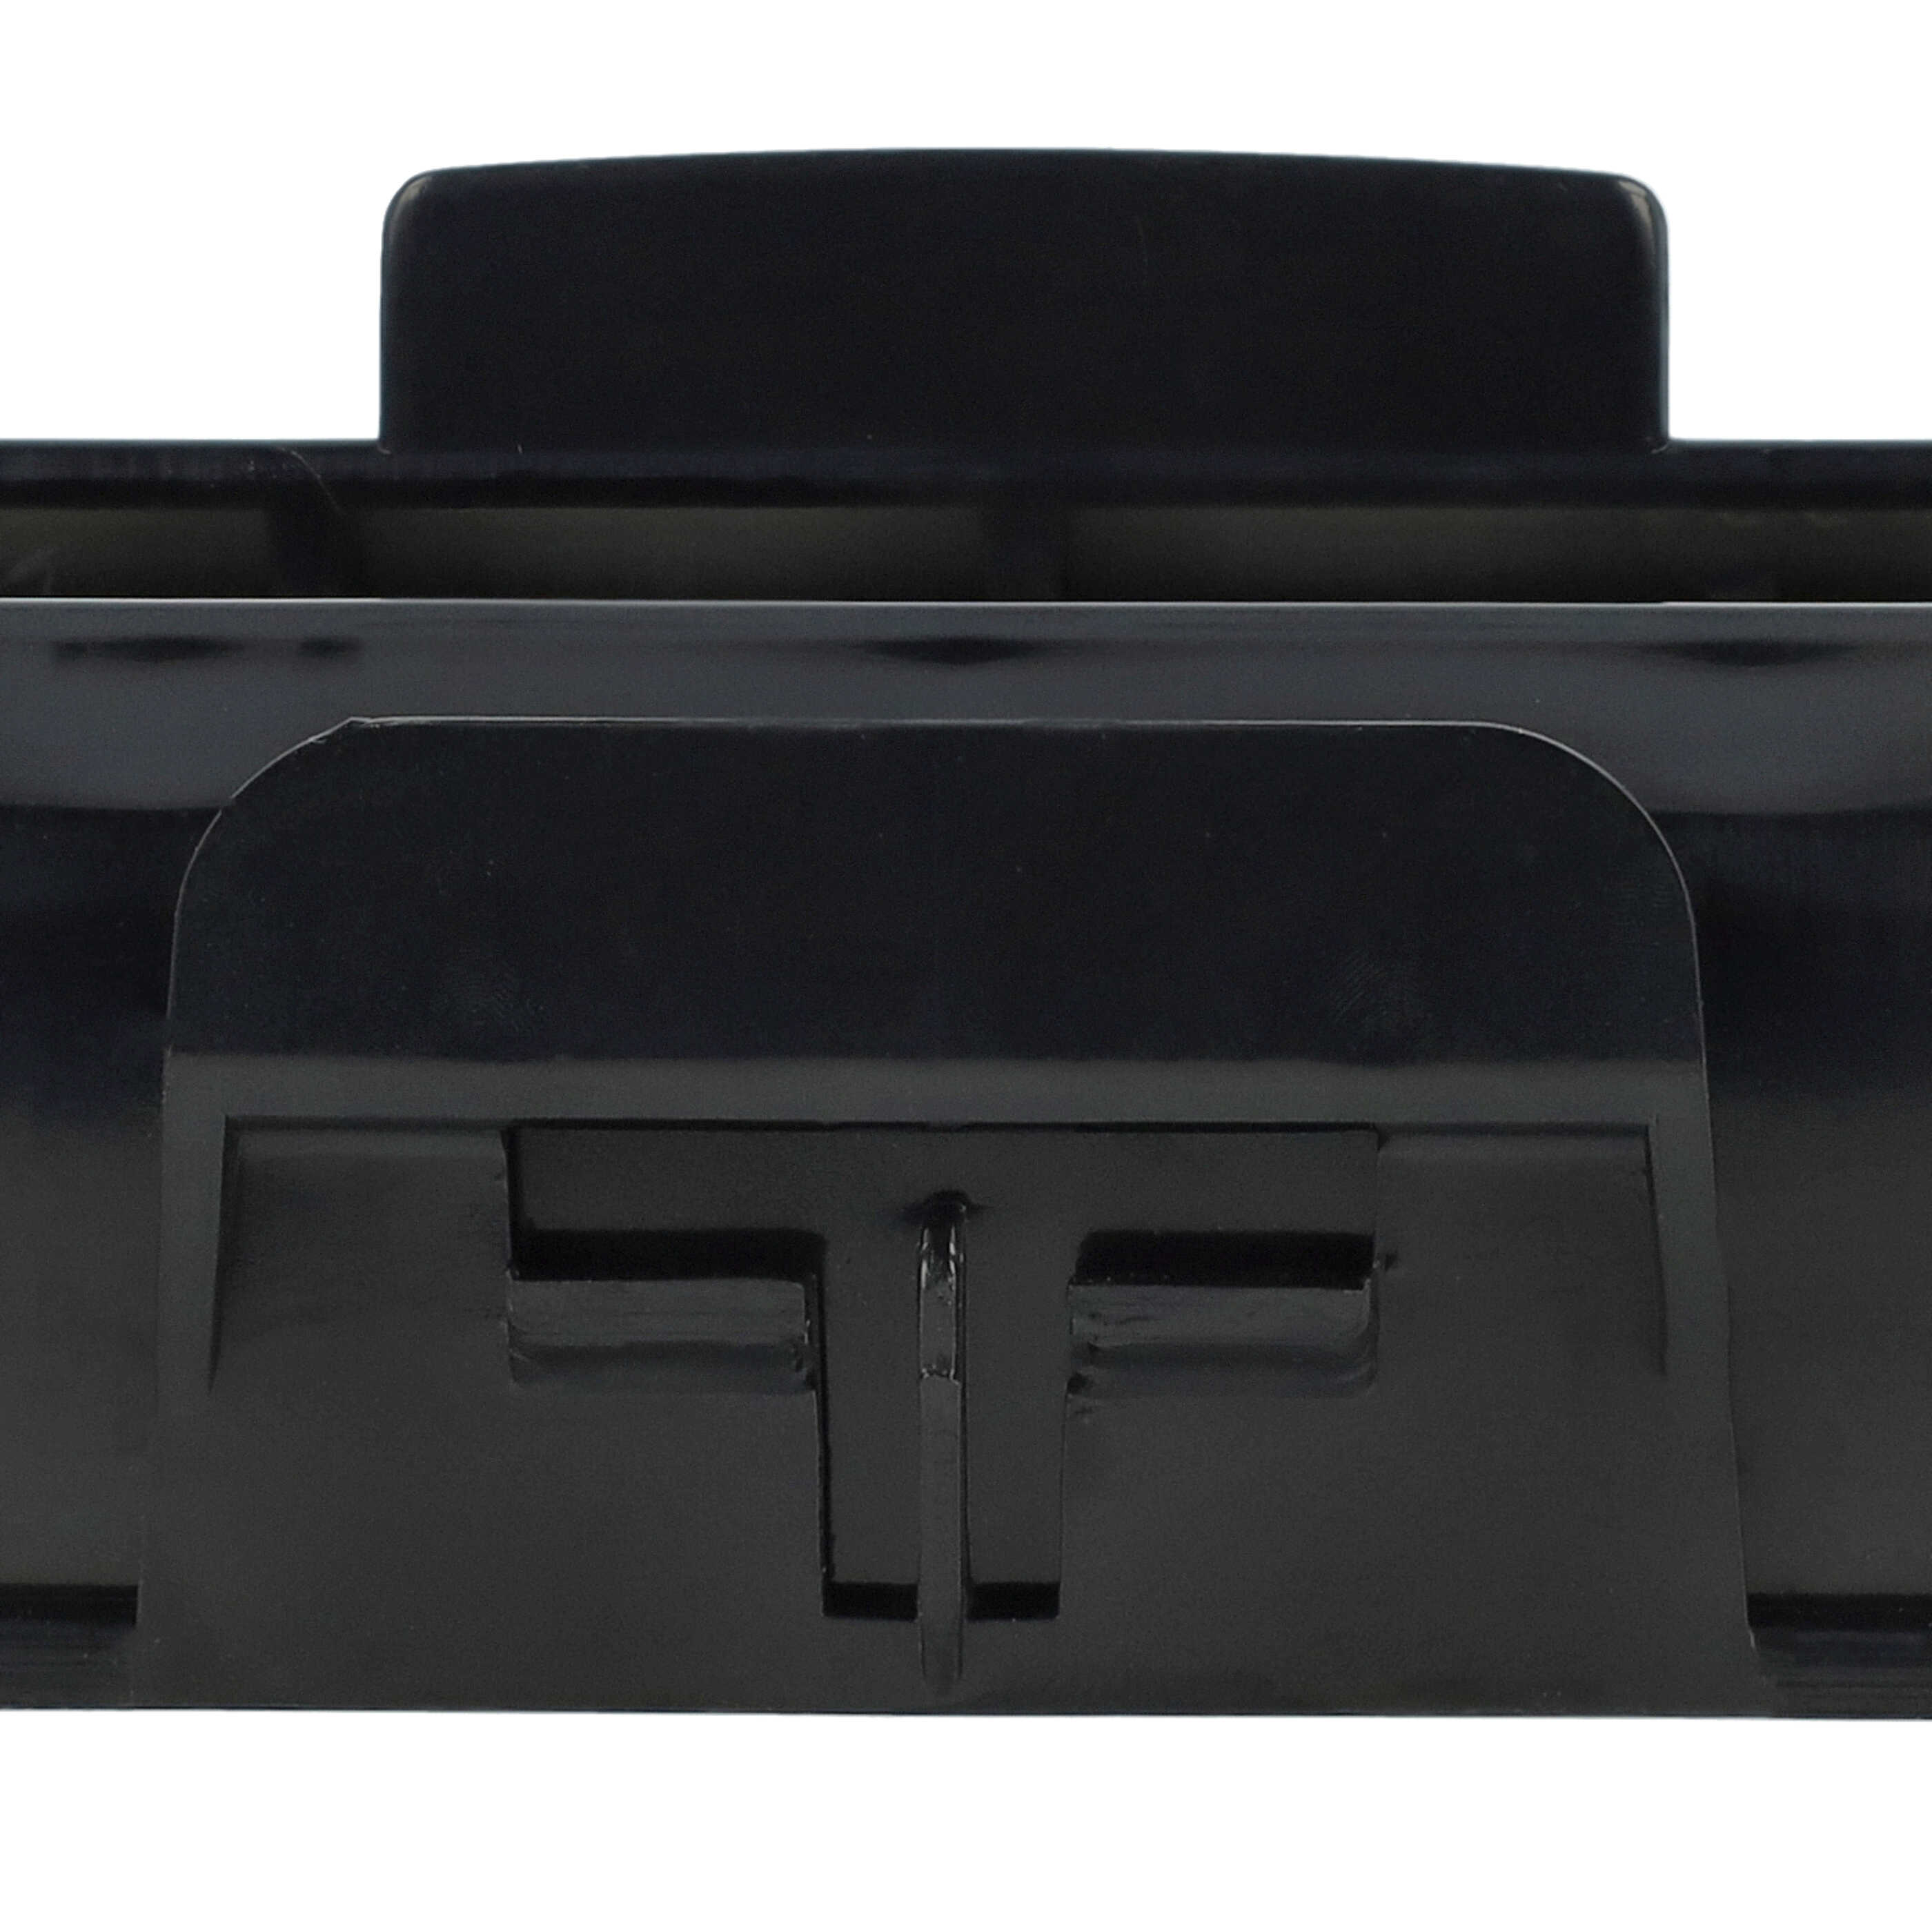 Filtro reemplaza Bosch BBZ152HF, 491669 para aspiradora - filtro Hepa negro / blanco